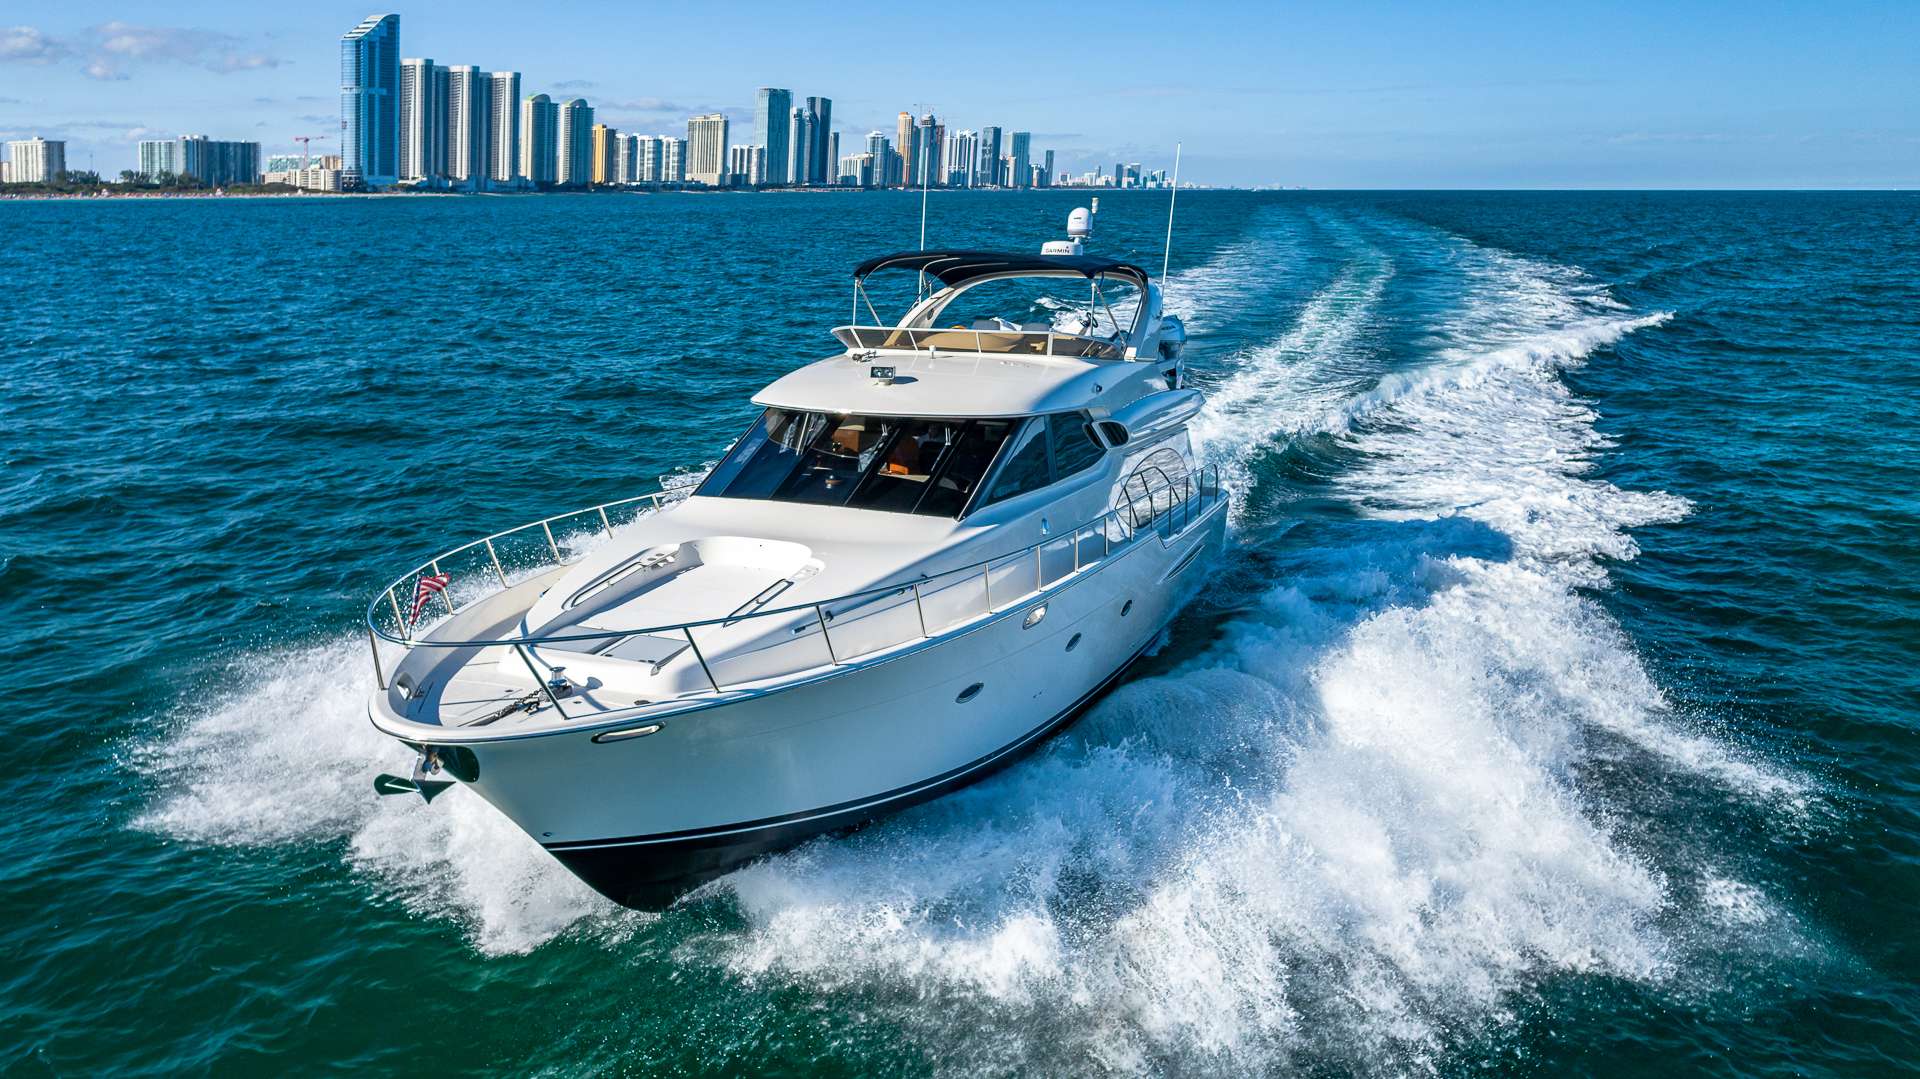 ELEGANT LADY - Motor Boat Charter Bahamas & Boat hire in Florida & Bahamas 1